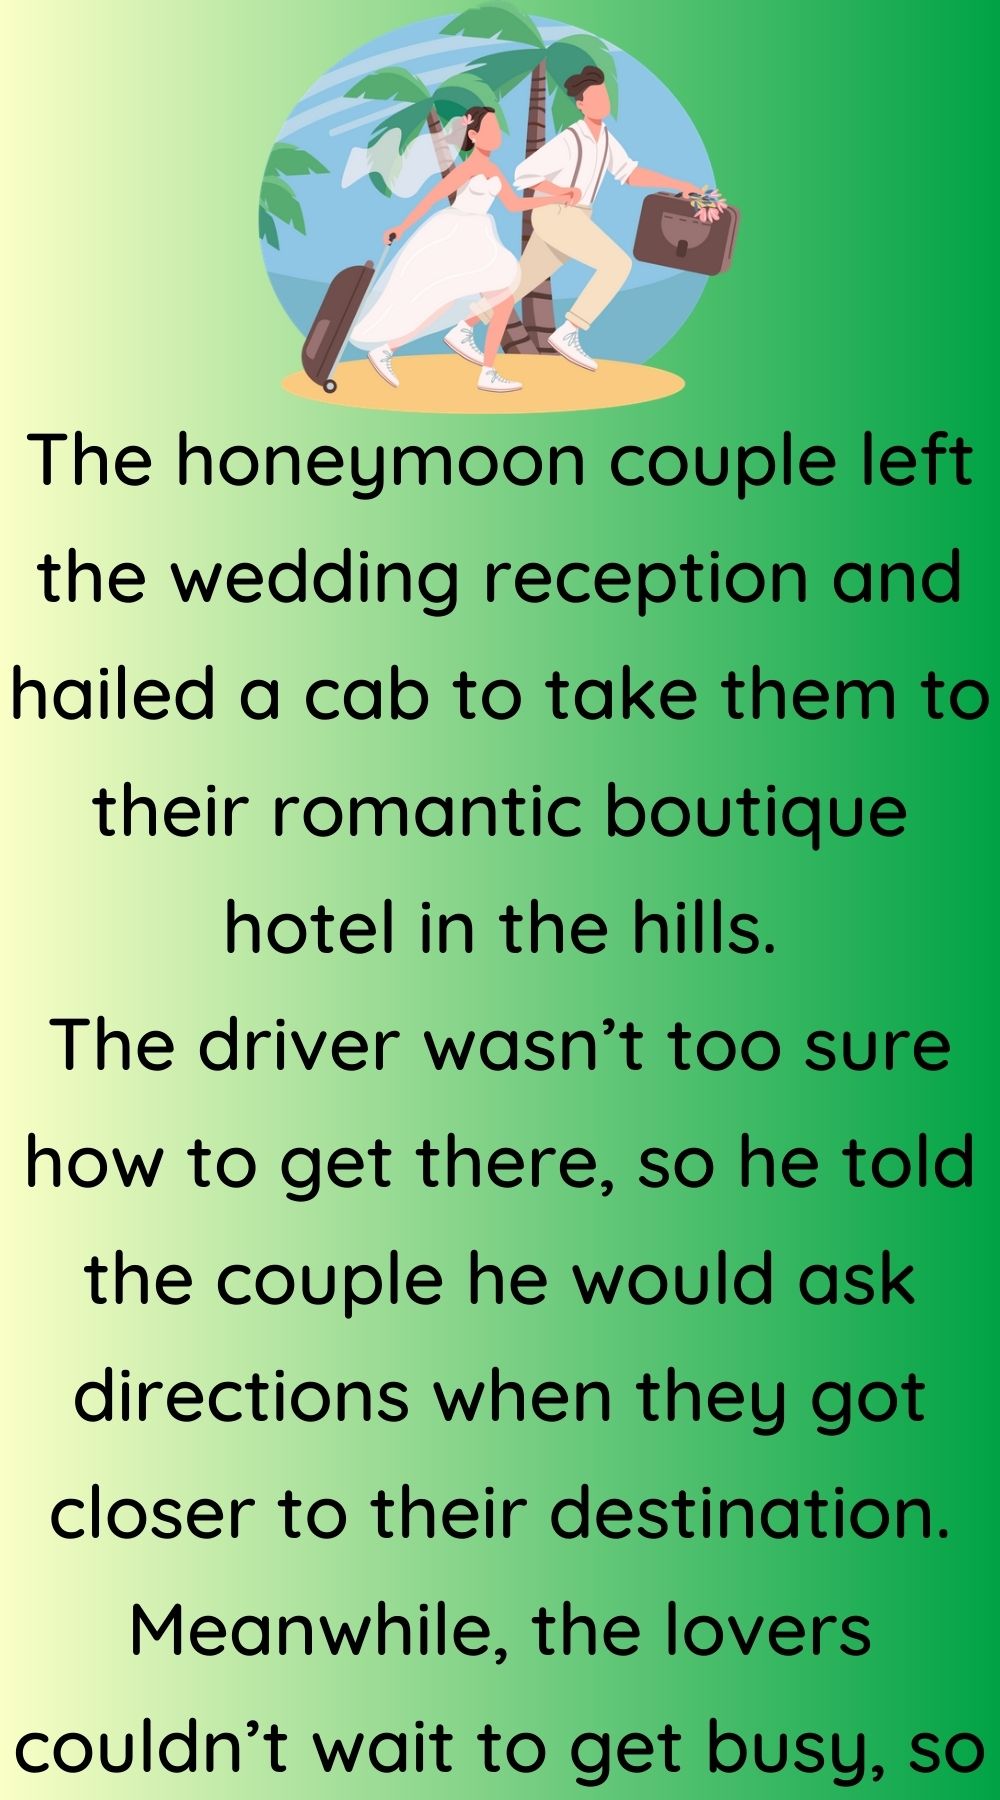 The honeymoon couple left the wedding reception